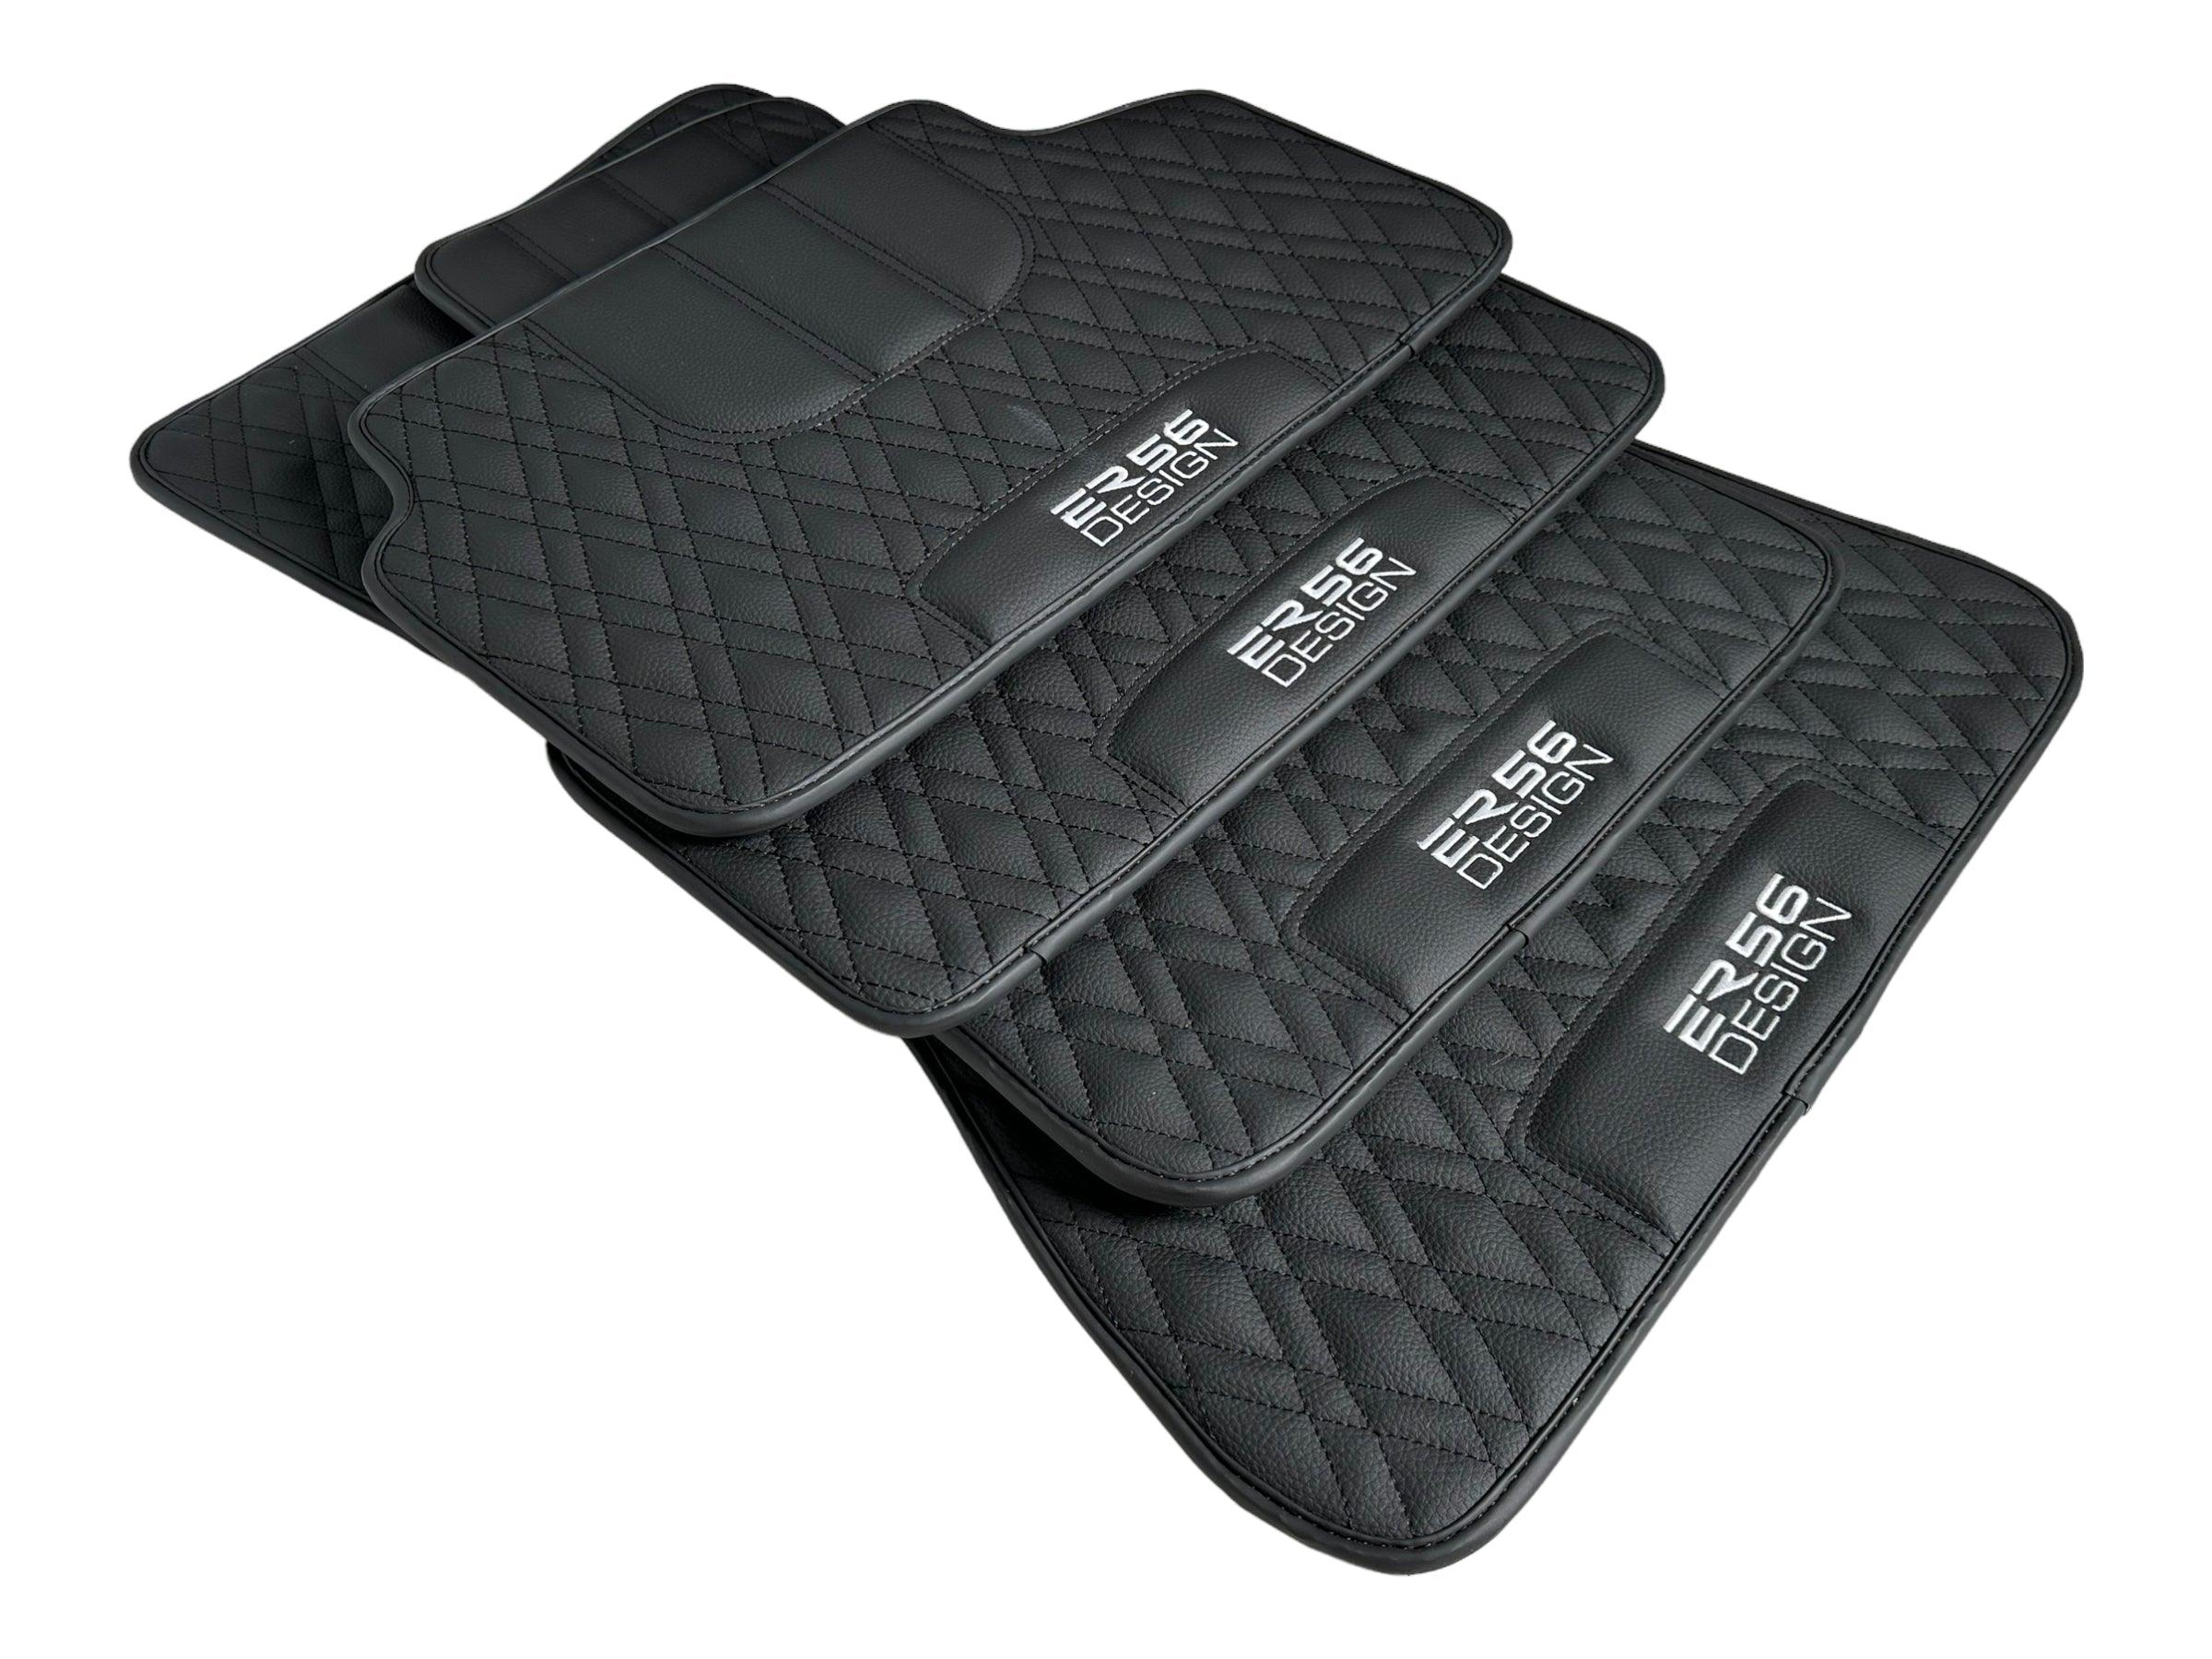 Floor Mats For BMW M5 F10 Black Leather Er56 Design - AutoWin